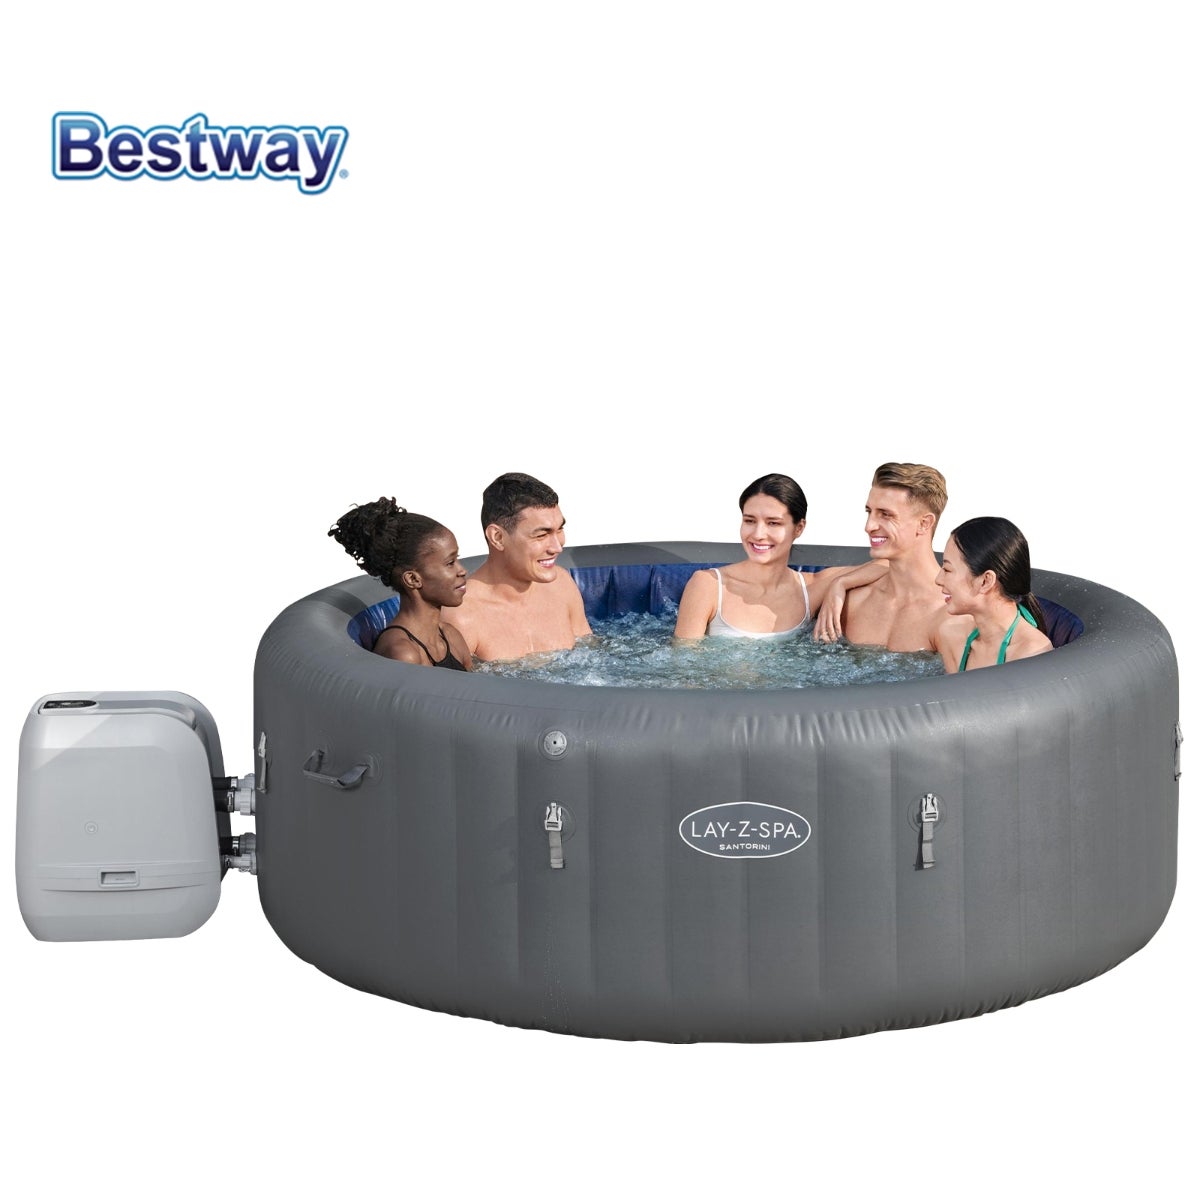 #60075 - Bestway Inflatable Spa Santorini 5-7 ppl Lay Z 180 Jets + 10 HydroJets LED Hot Tub Bathtub Pool